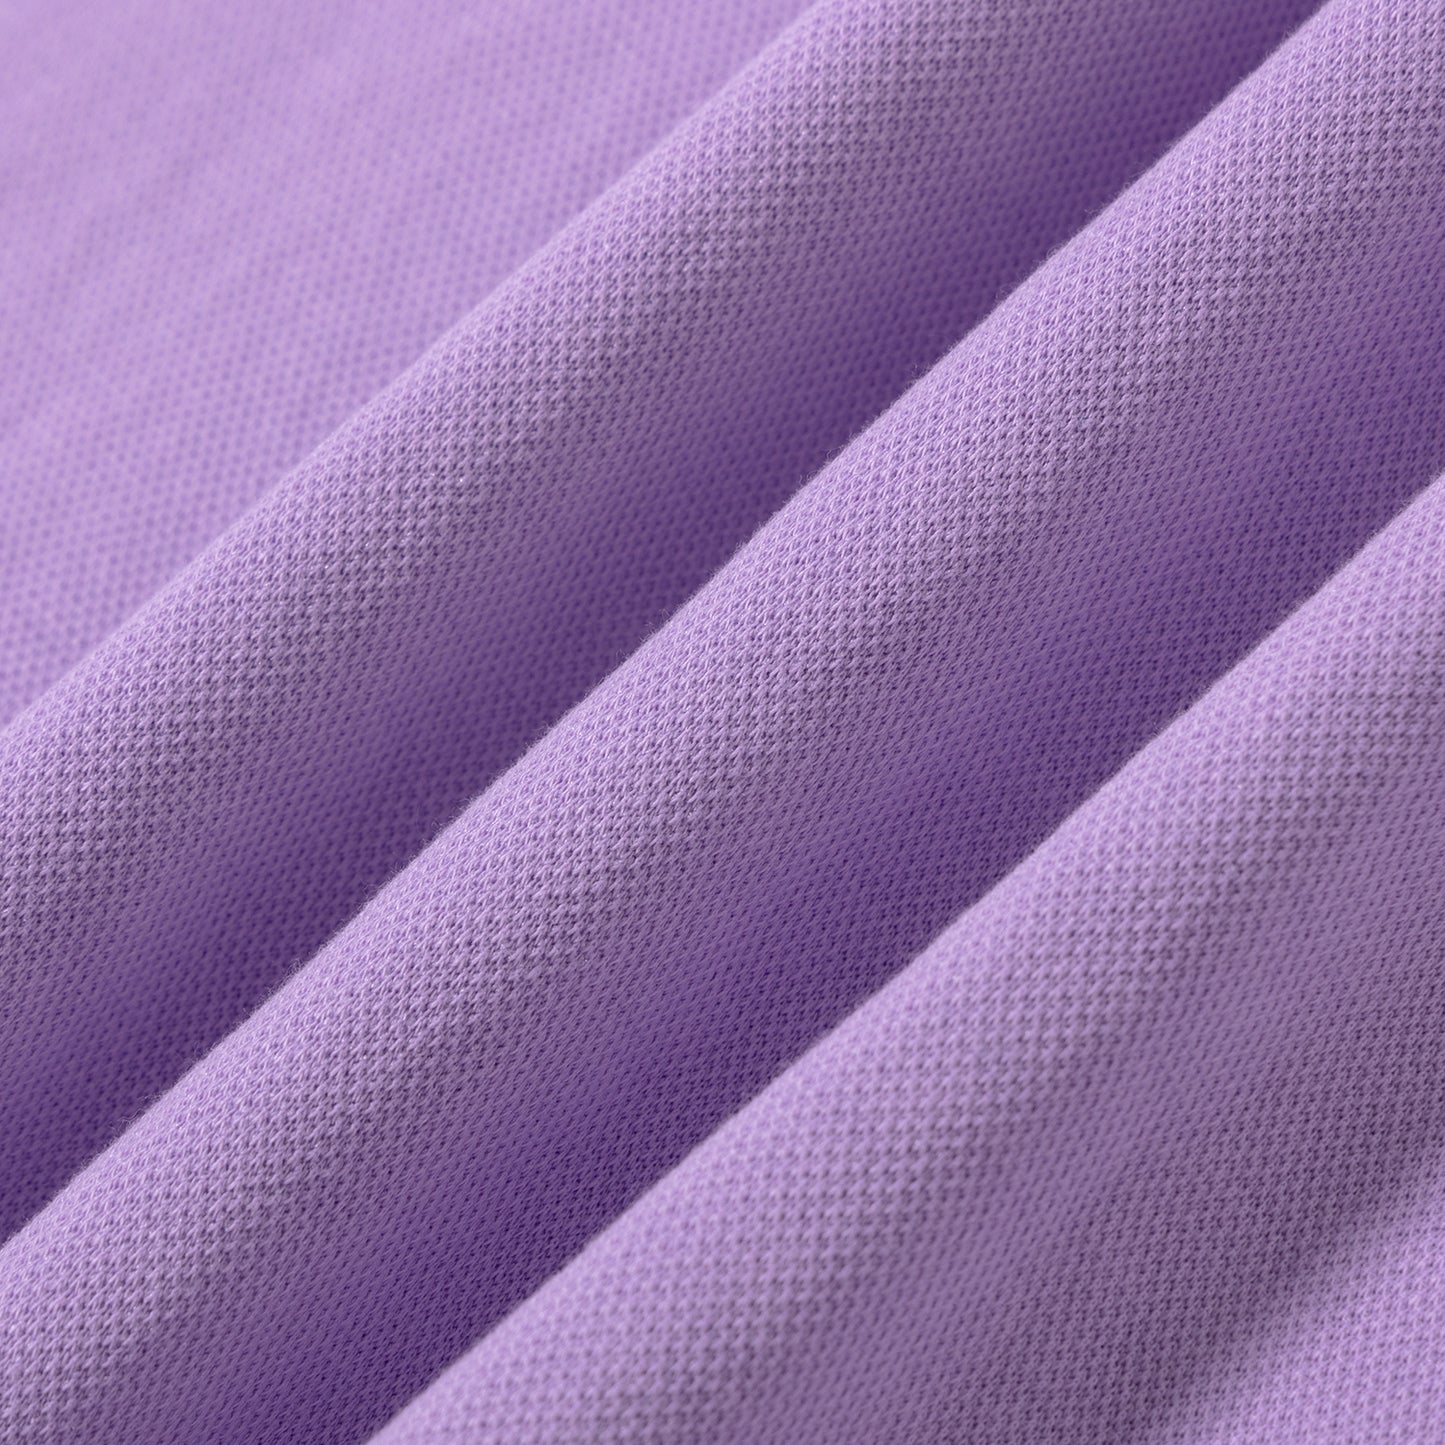 Polo shirt puff, purple